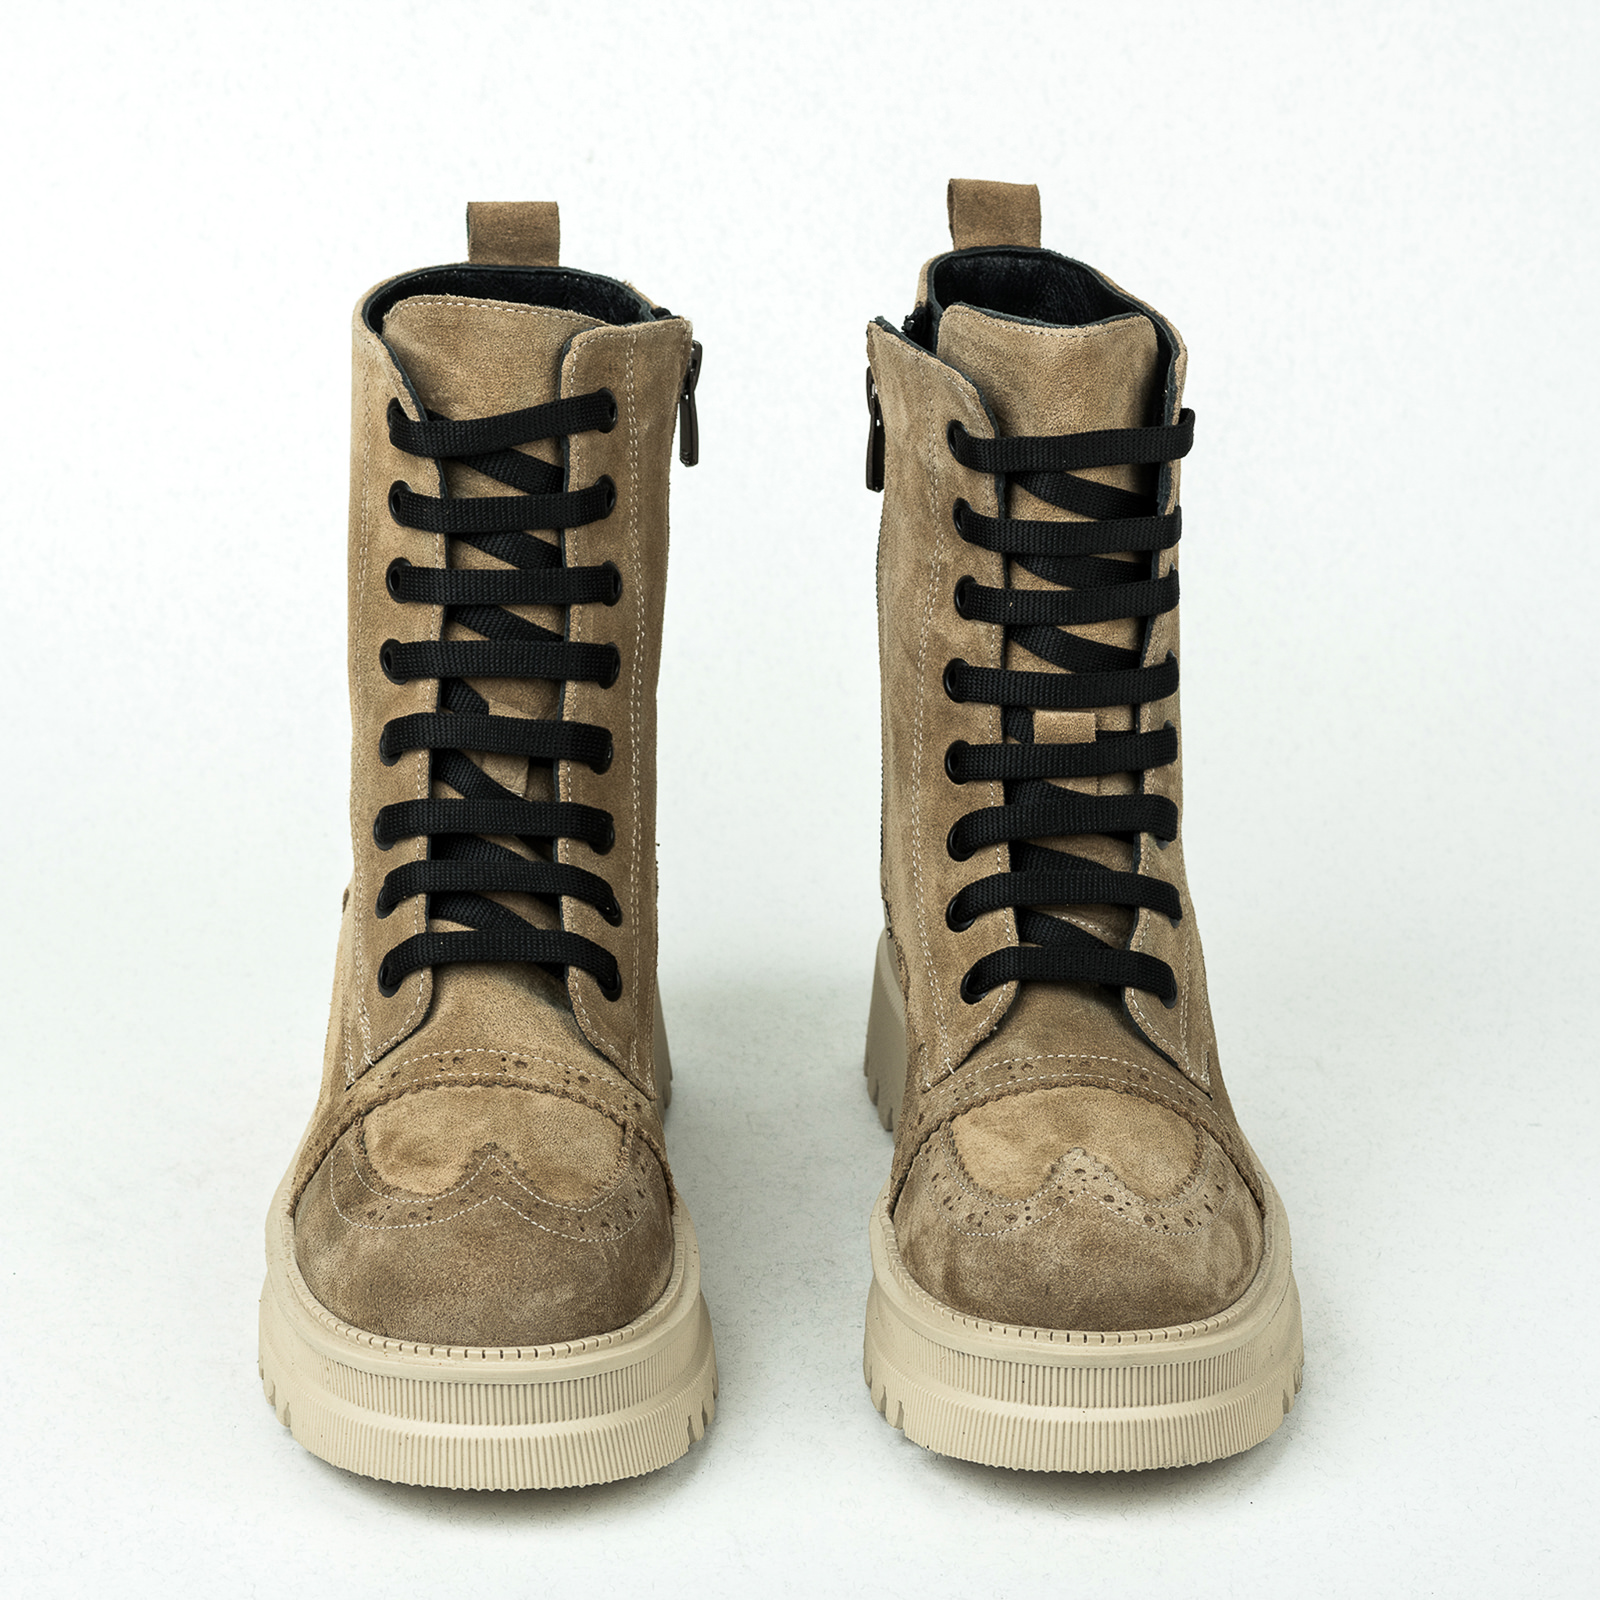 Leather booties B243 - BEIGE